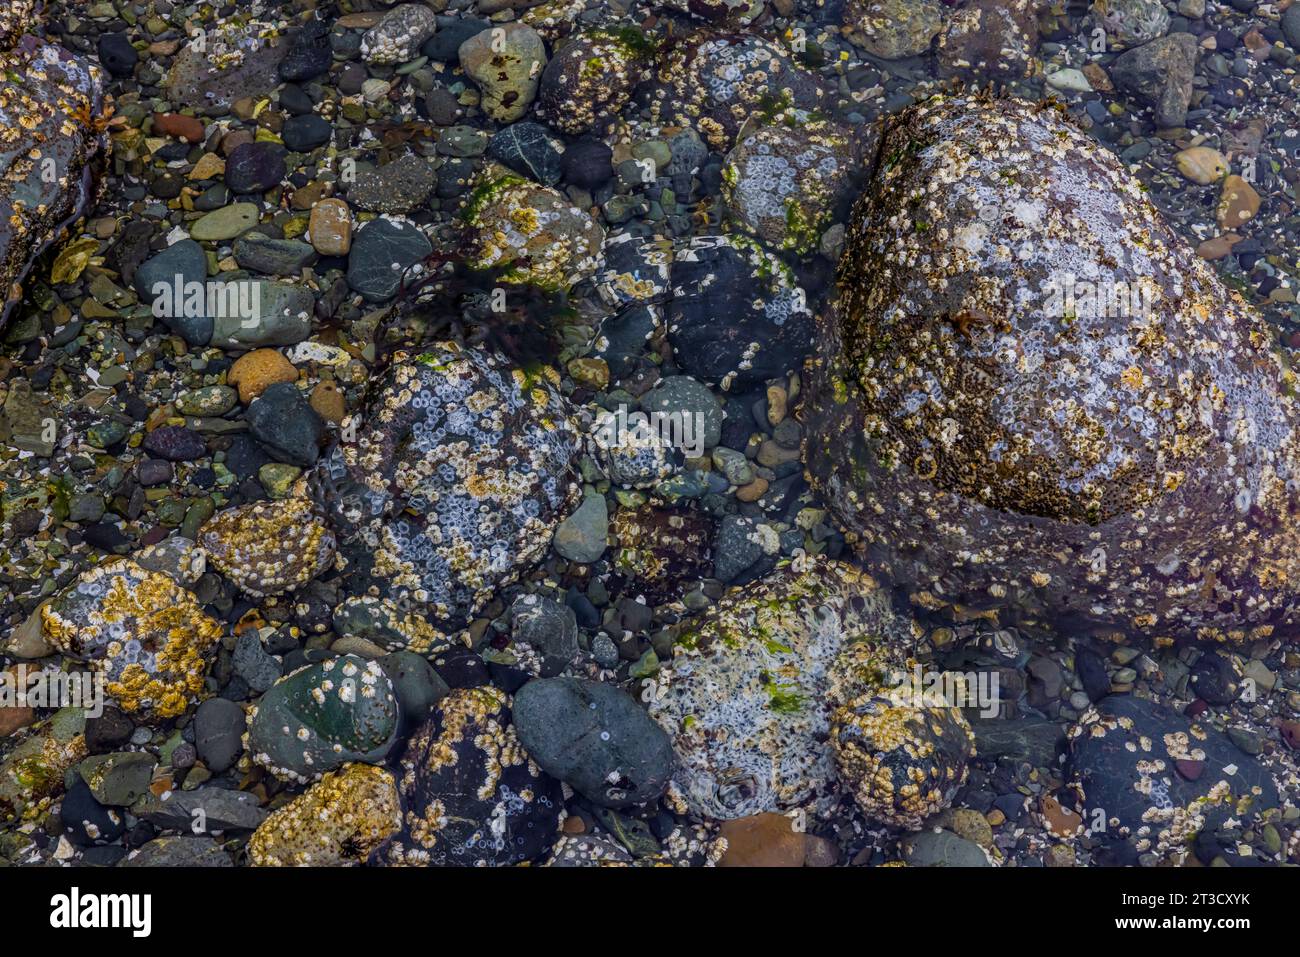 Northern Rock Barnacles, Semibalanus balanoides, growing on rocks at the ancient Haida village of T'aanuu Linagaay, Gwaii Haanas National Park Preserv Stock Photo